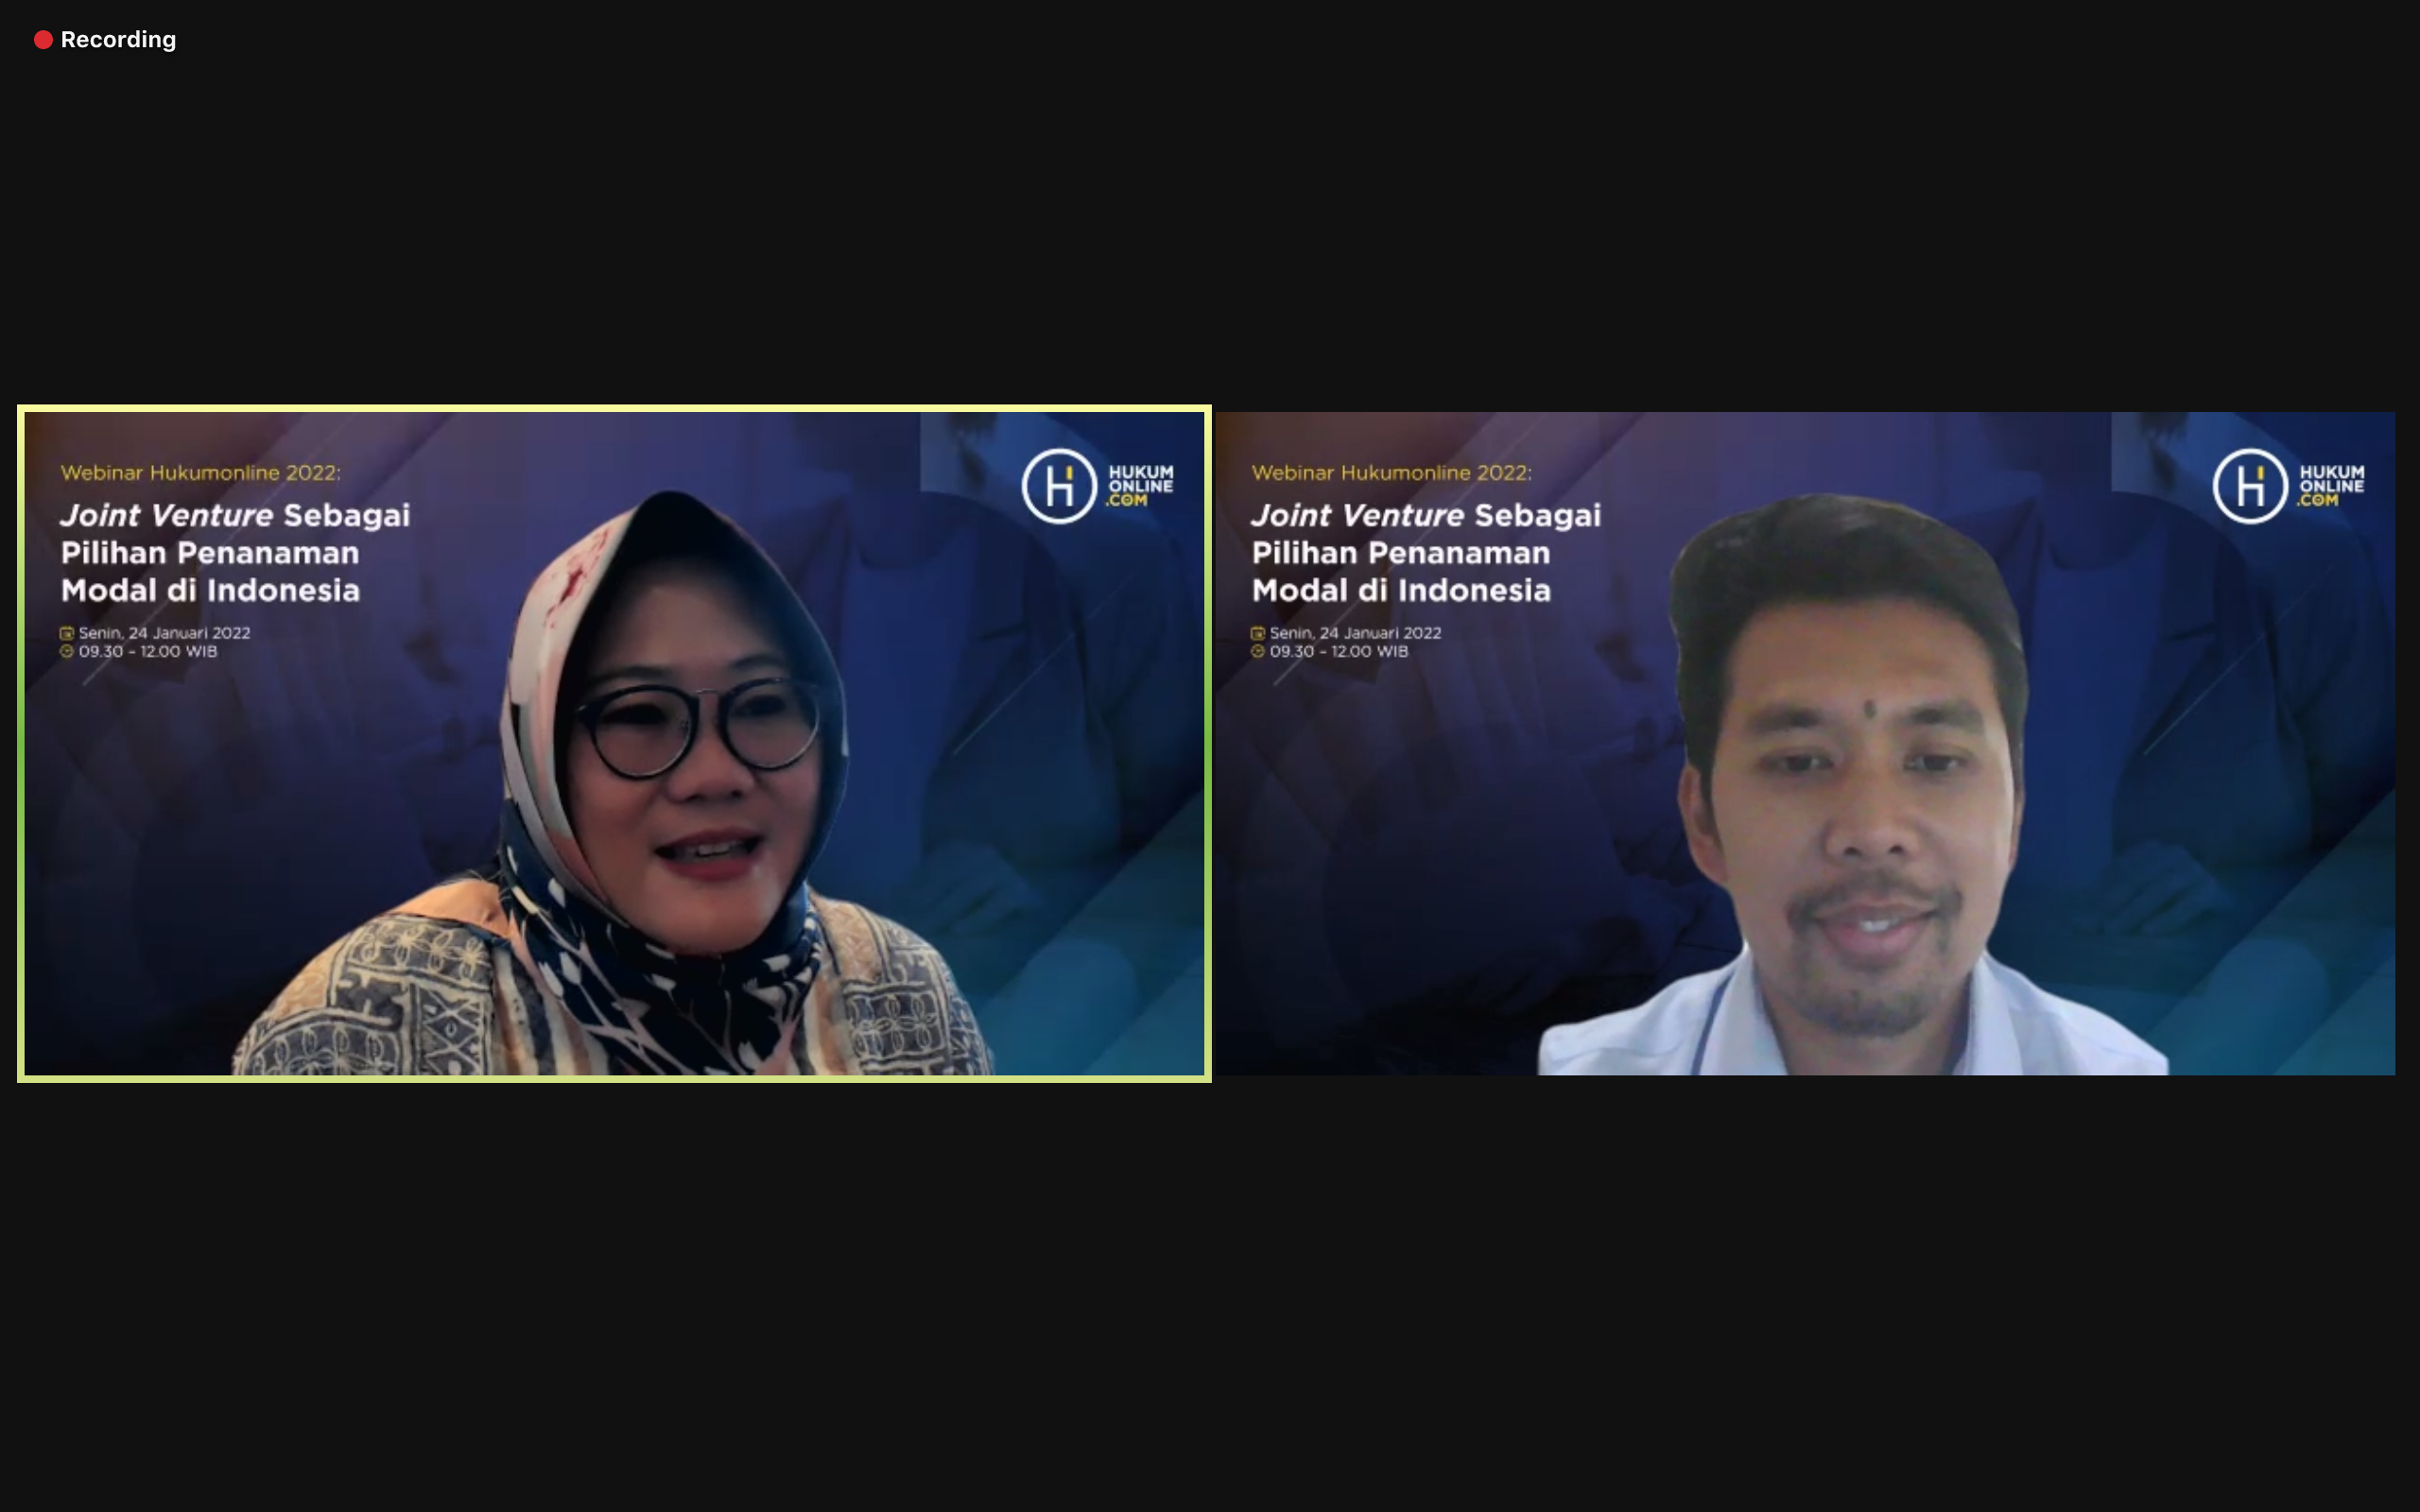 Joint Venture Sebagai Pilihan Penanaman Modal di Indonesia